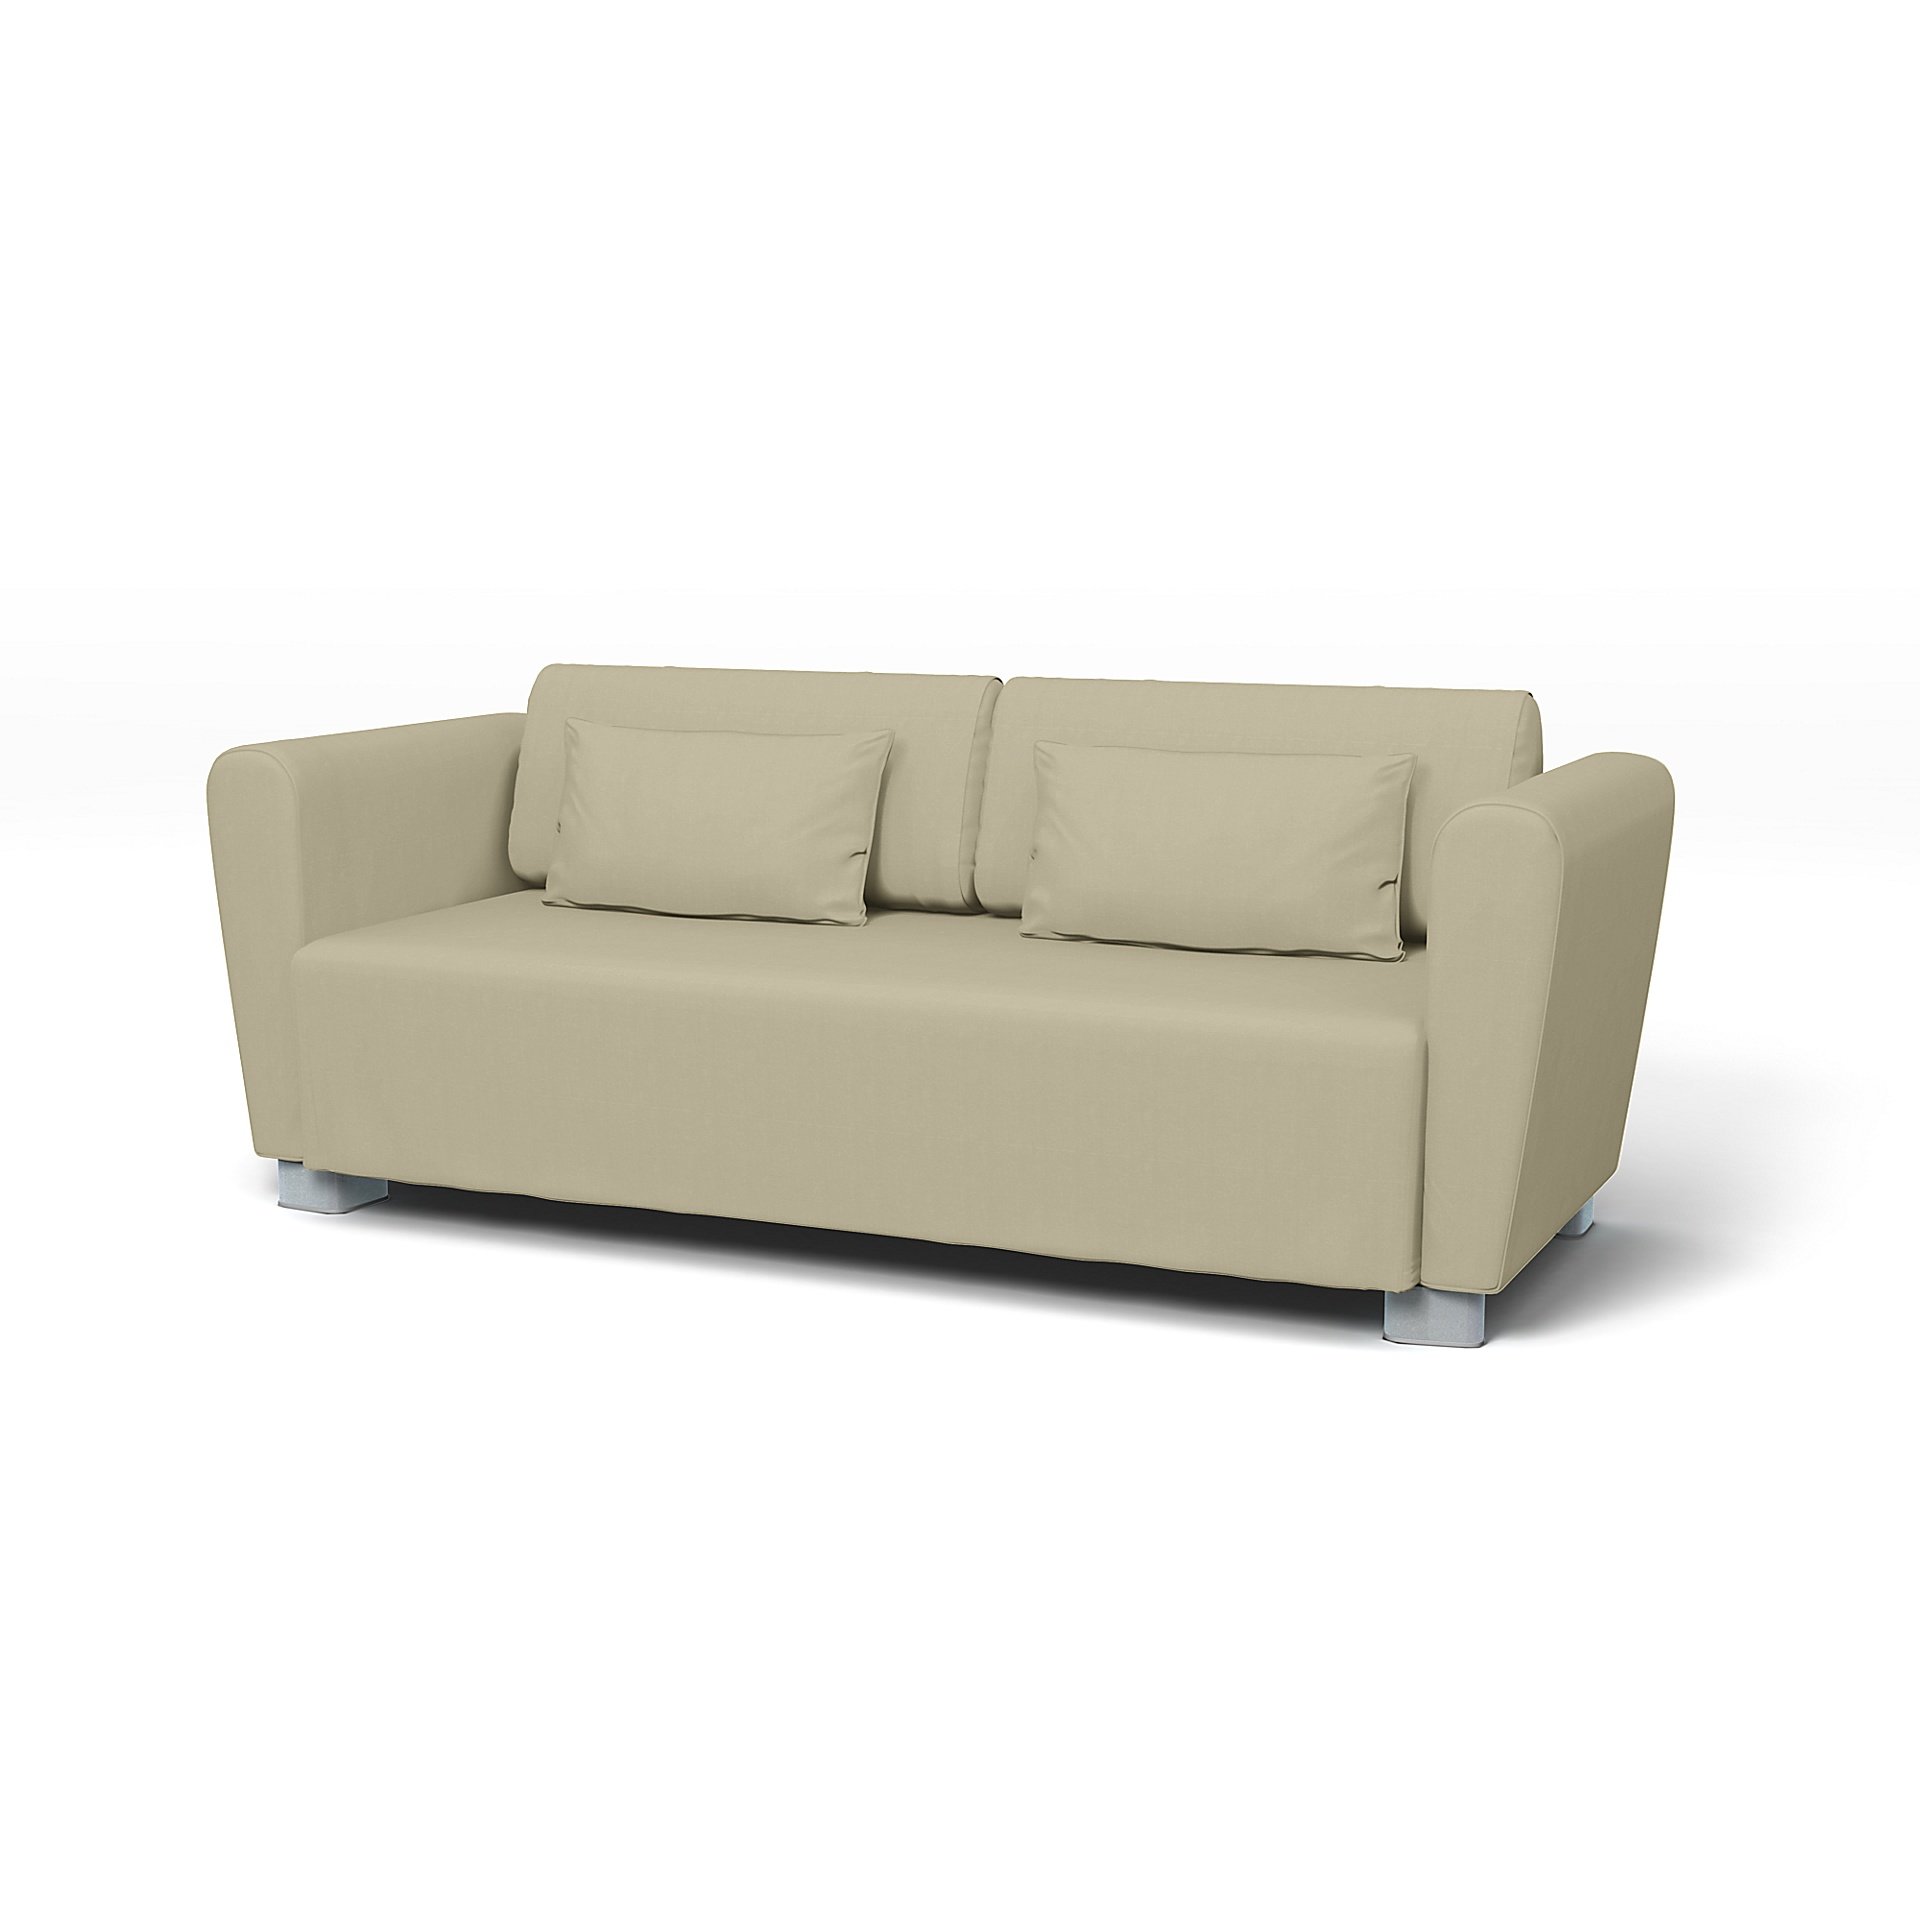 IKEA - Mysinge 2 Seater Sofa Cover, Sand Beige, Cotton - Bemz